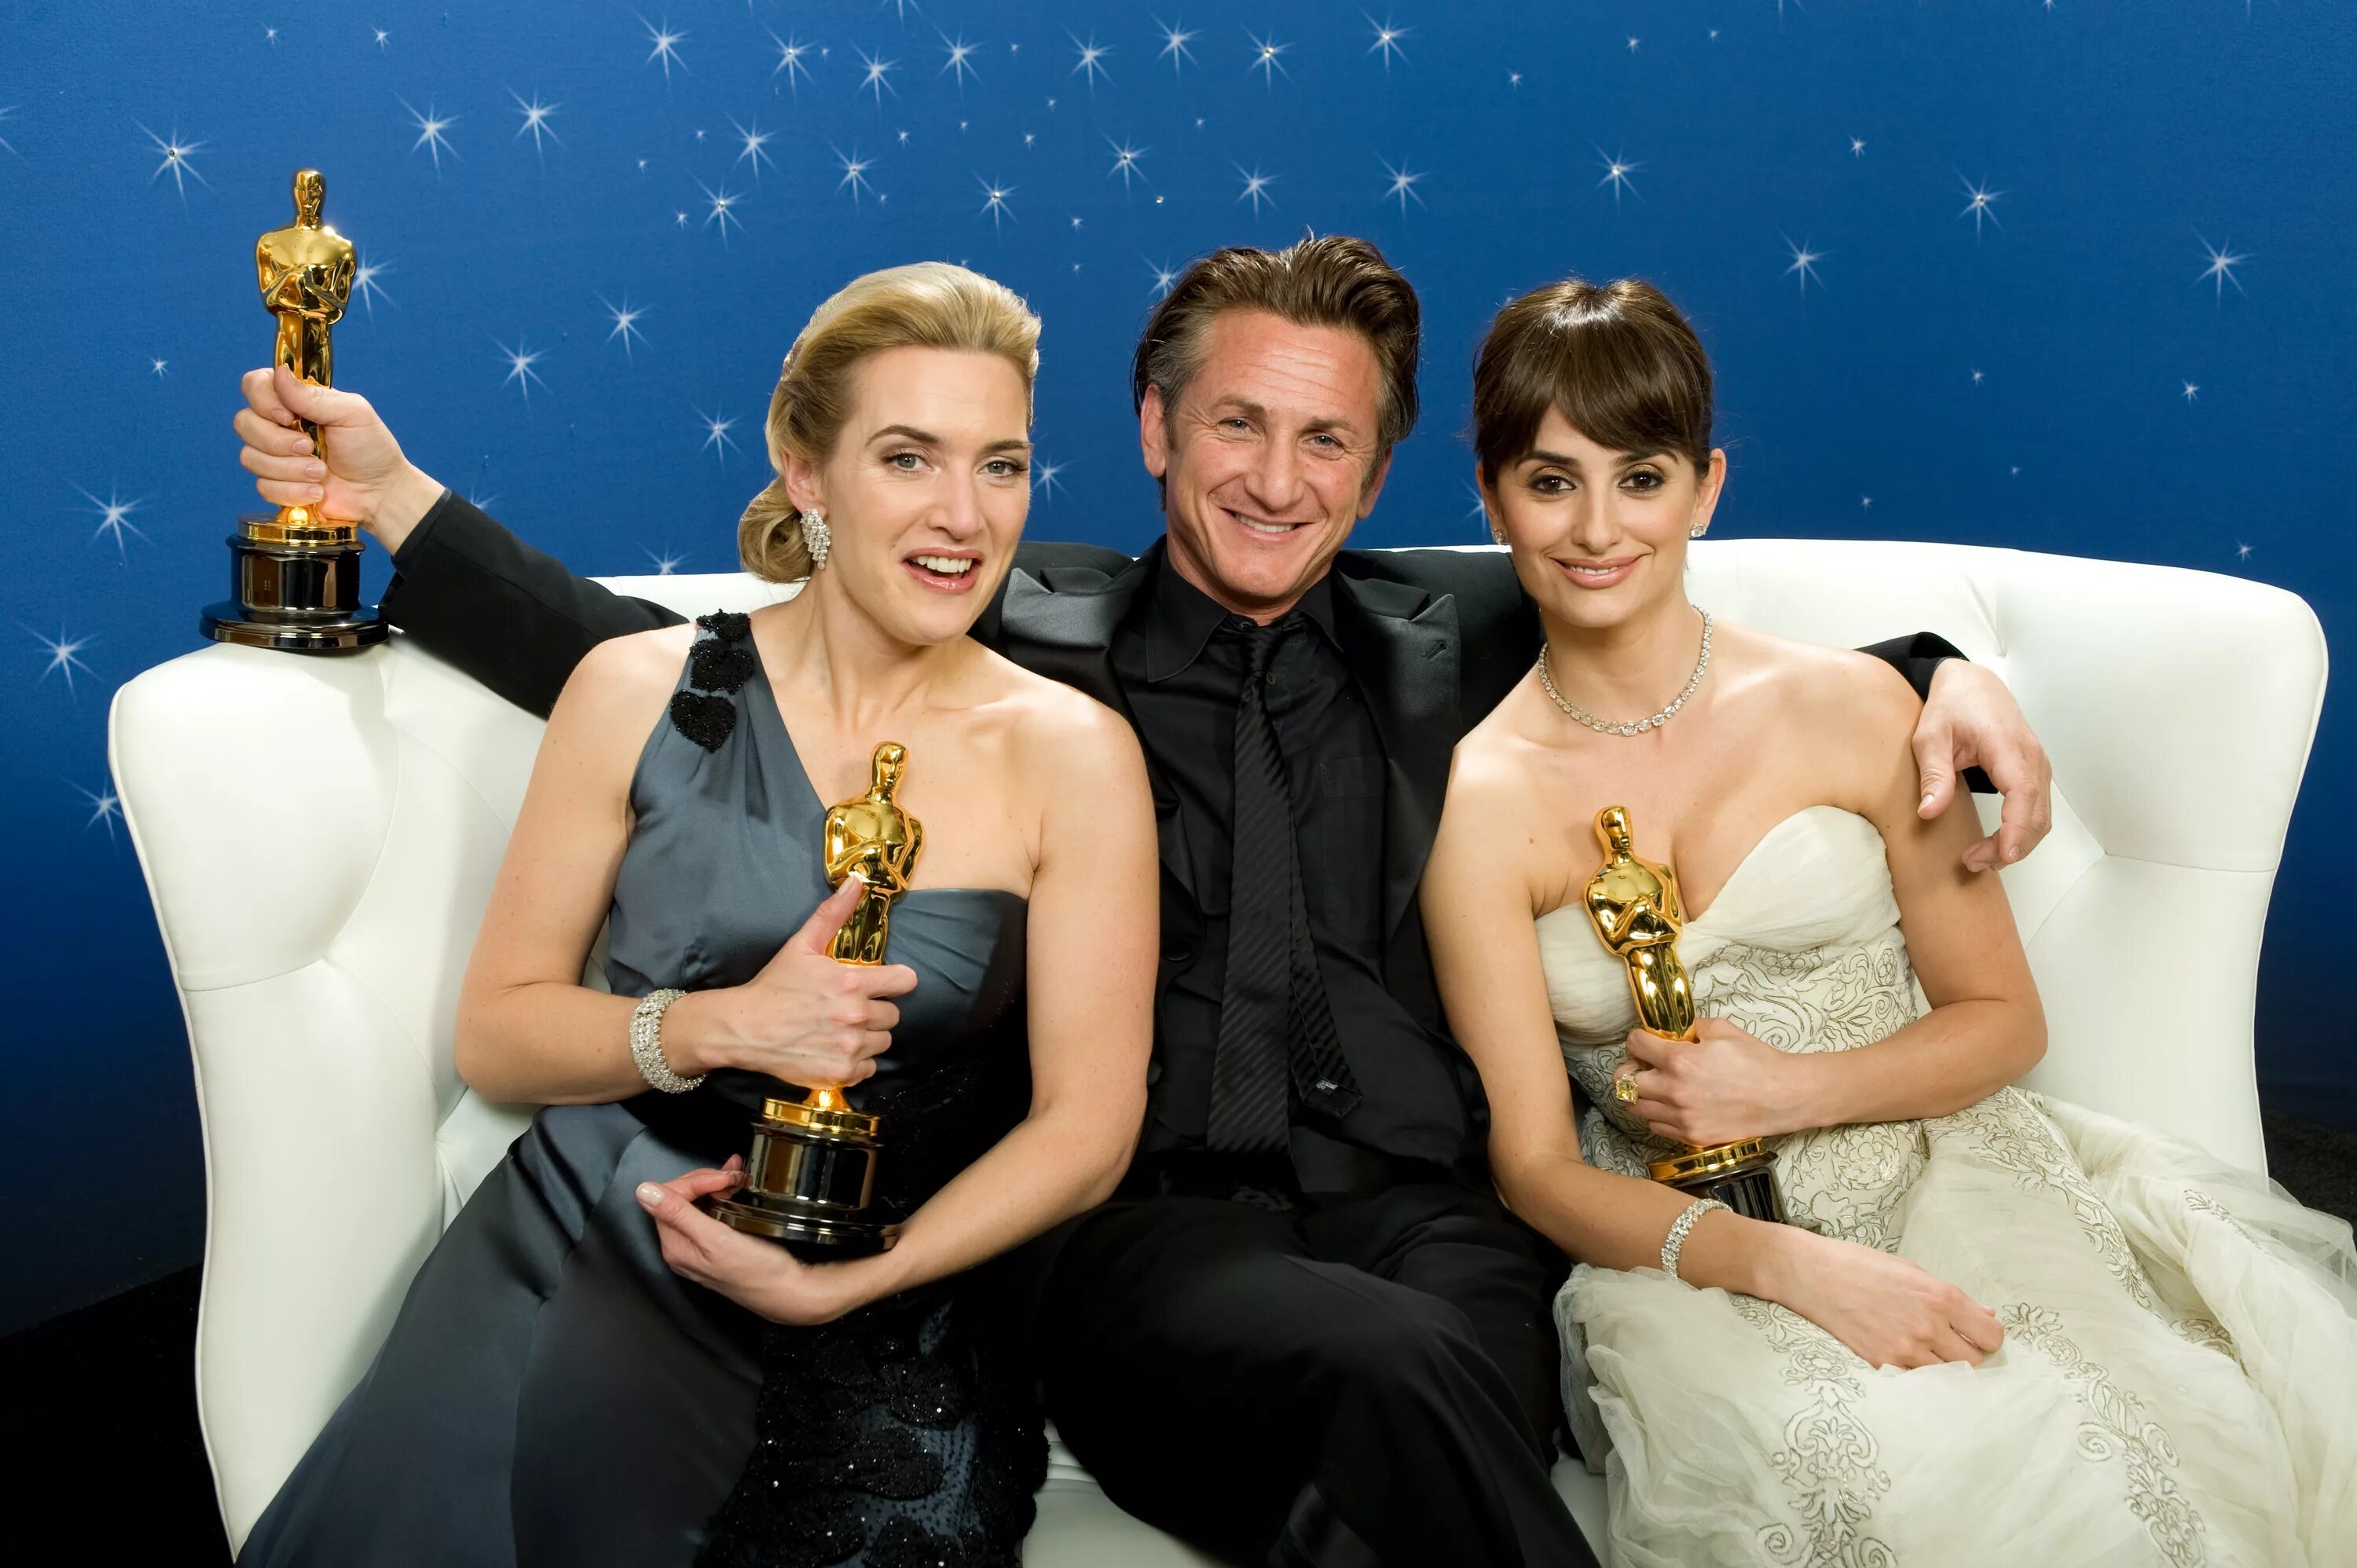 Кейт Уинслет 2009 год Оскар. Шон Пенн вручил Оскар Зеленскому. Оскар за последние 10 лет